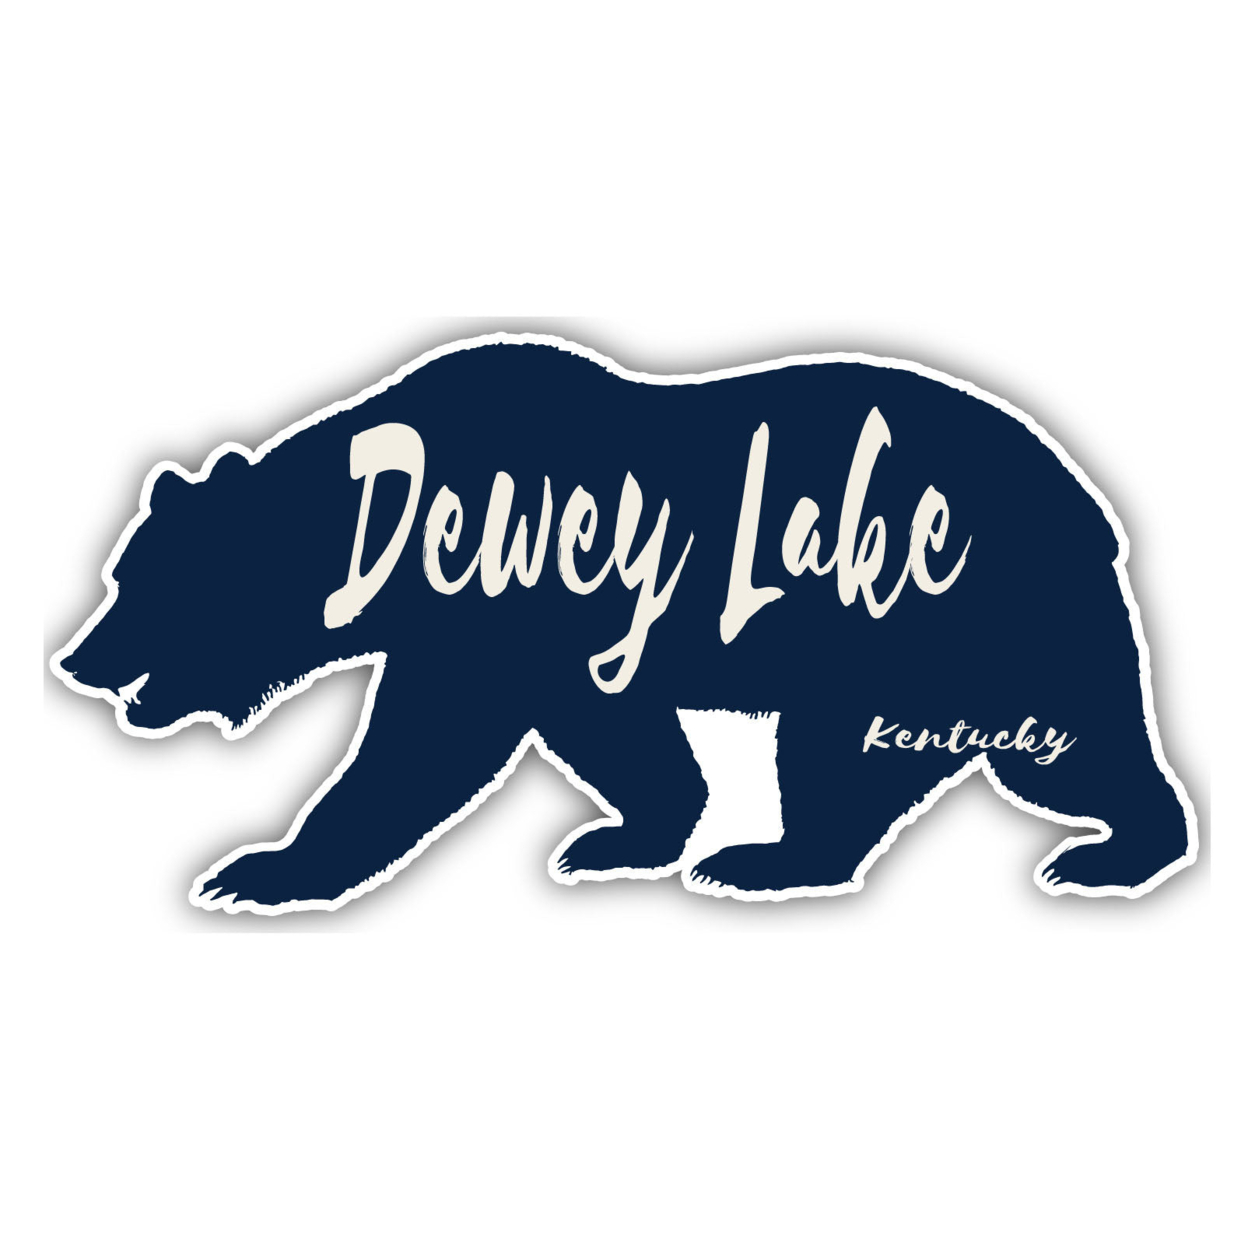 Dewey Lake Kentucky Souvenir Decorative Stickers (Choose Theme And Size) - Single Unit, 8-Inch, Bear